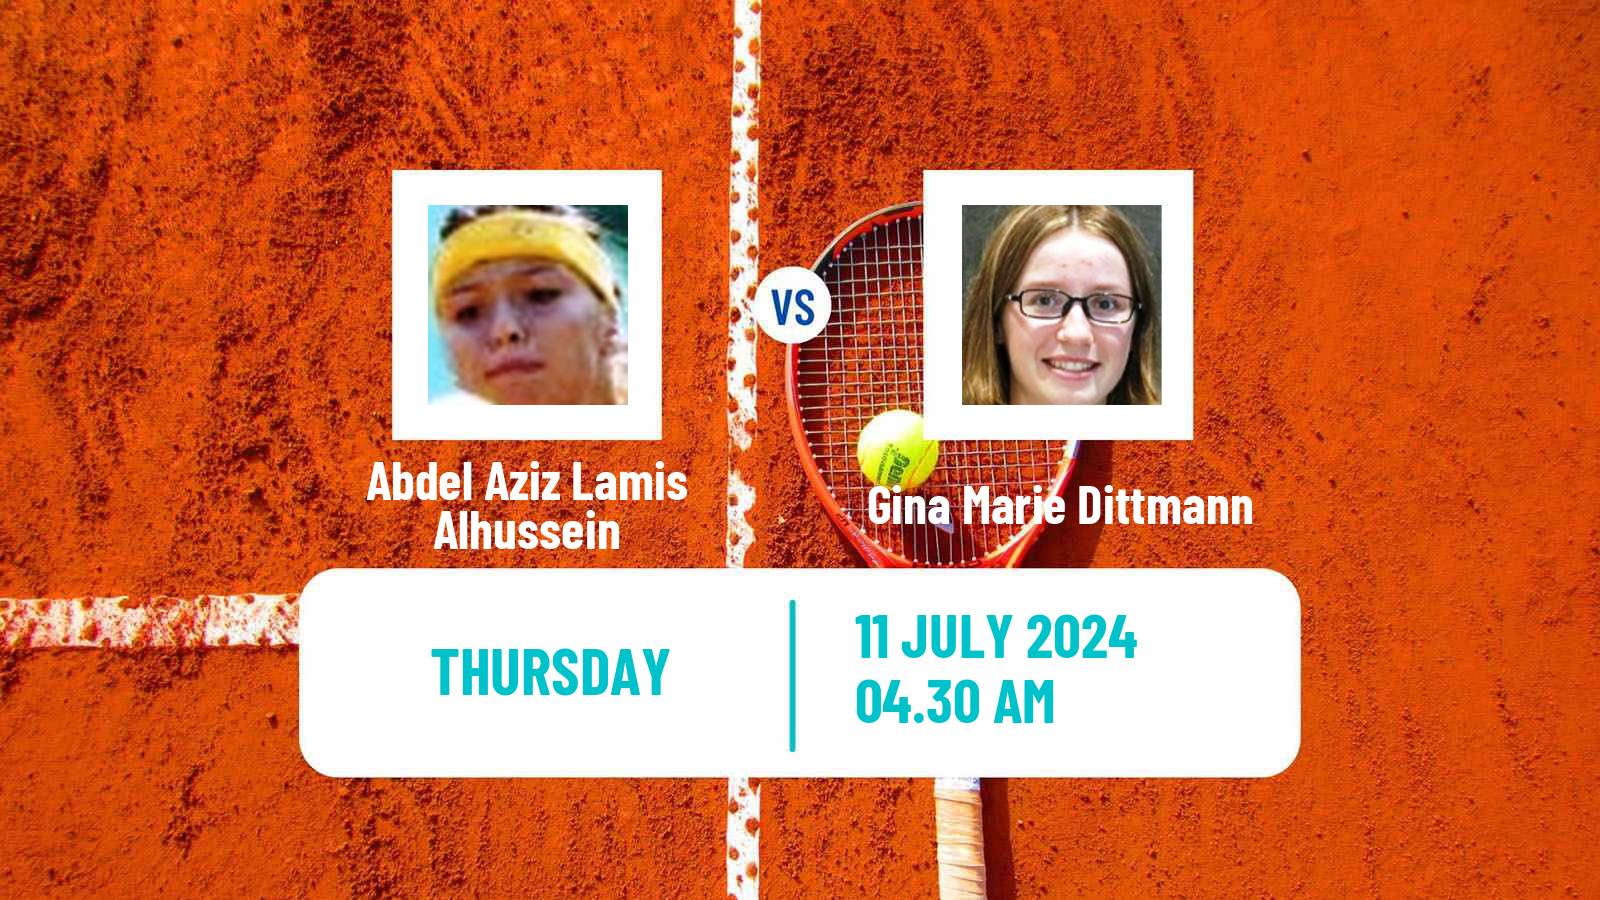 Tennis ITF W15 Monastir 26 Women Abdel Aziz Lamis Alhussein - Gina Marie Dittmann